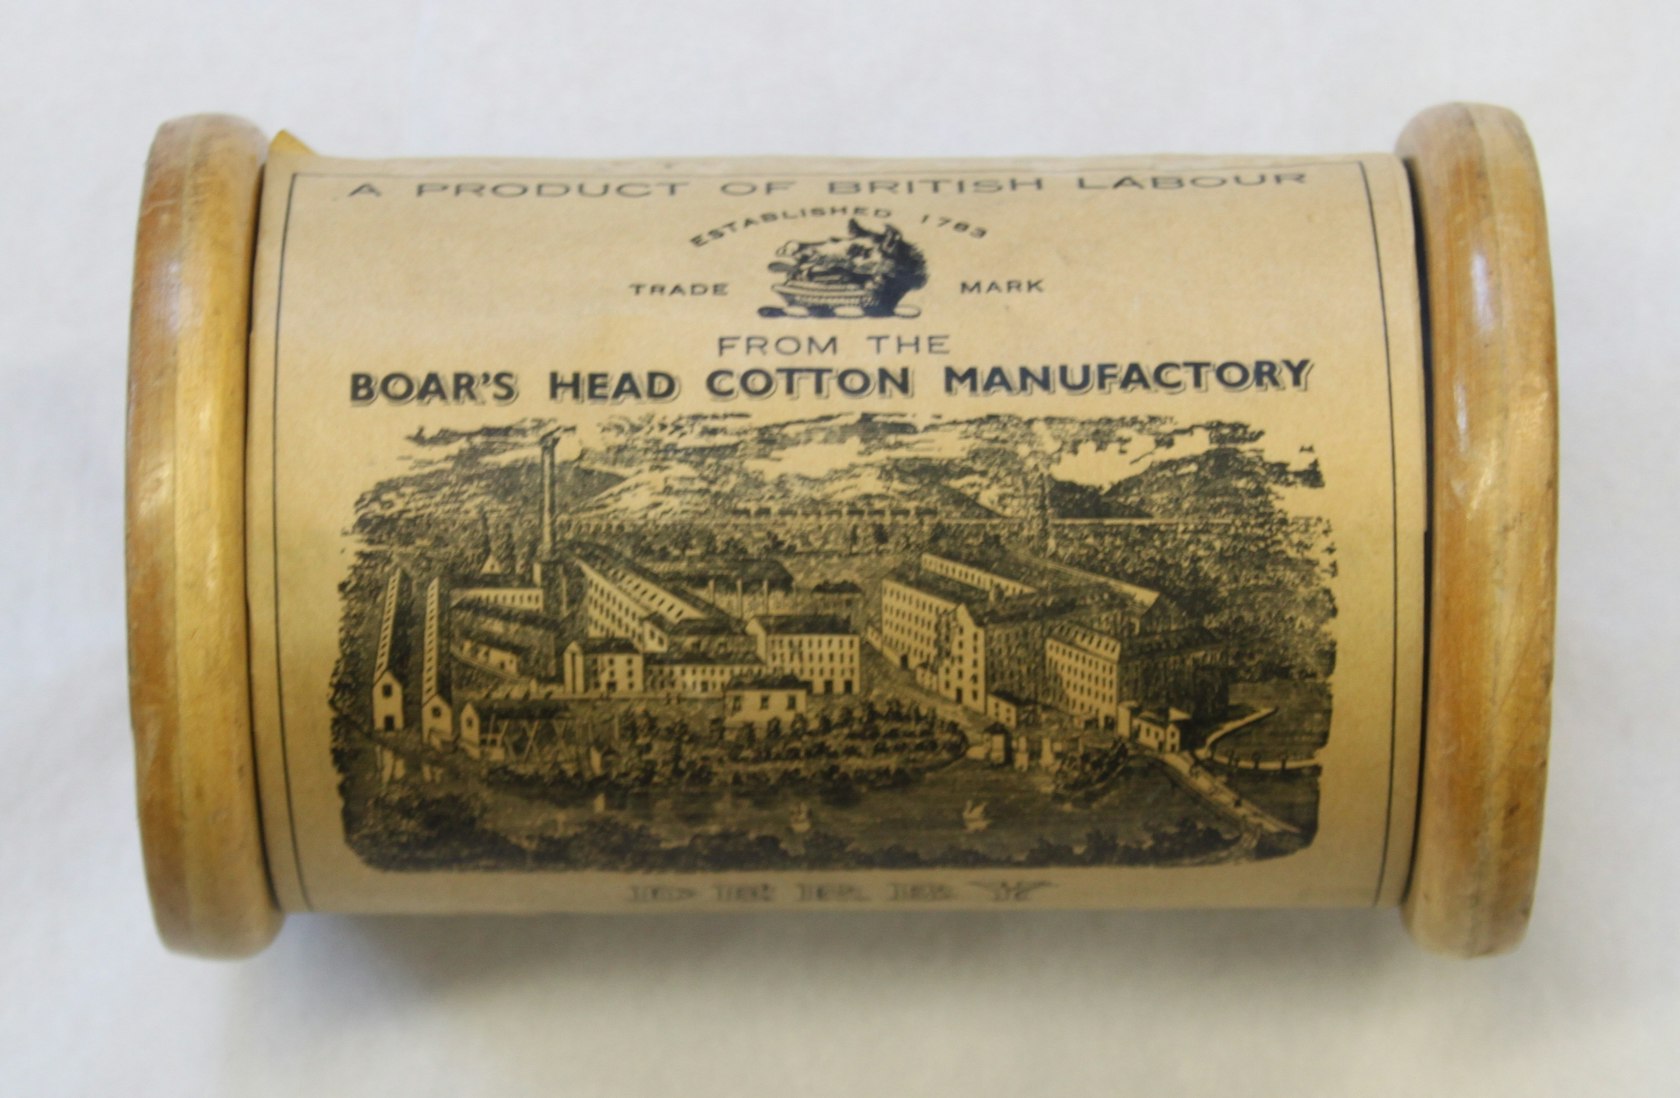 Reel of cotton thread from Boars Head Mill, Darley Abbey